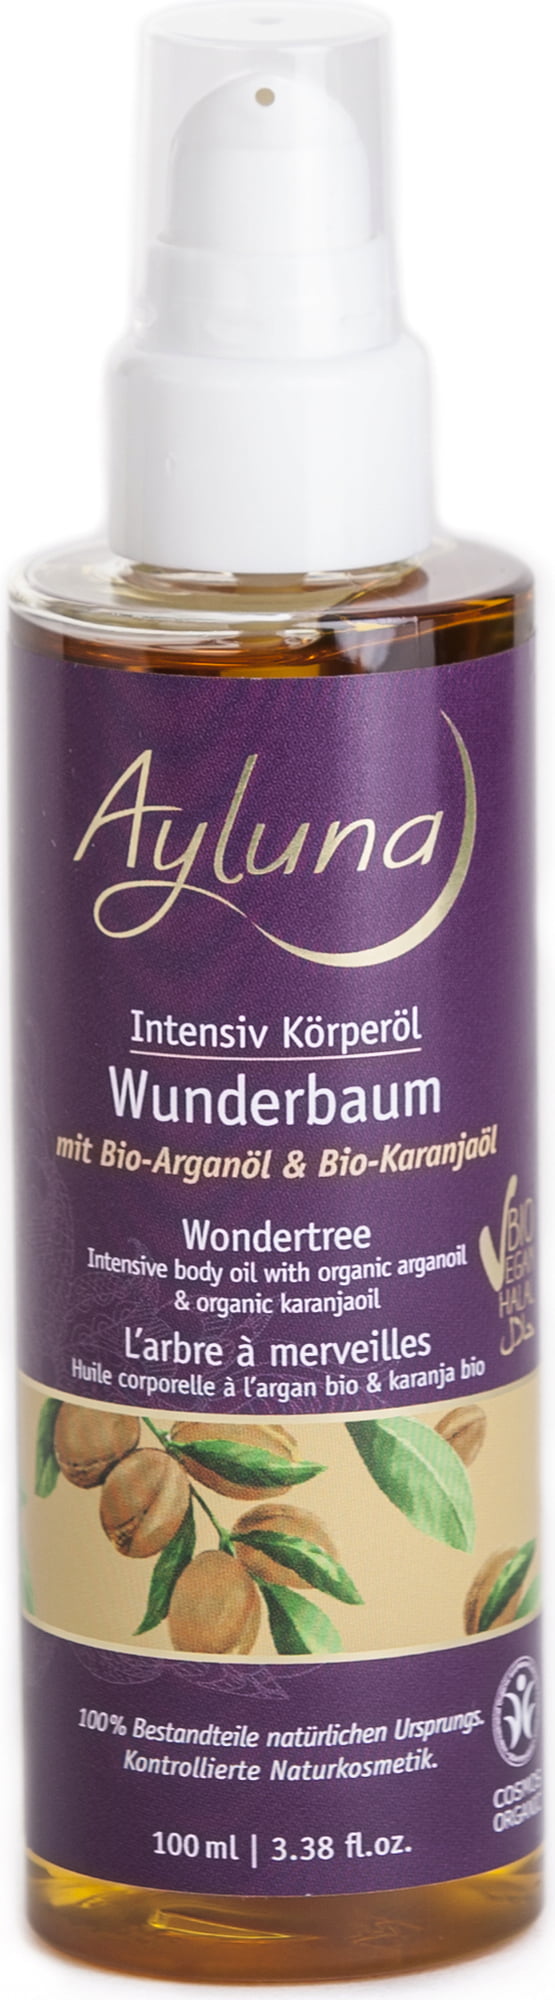 Ayluna Wondertree Body Oil